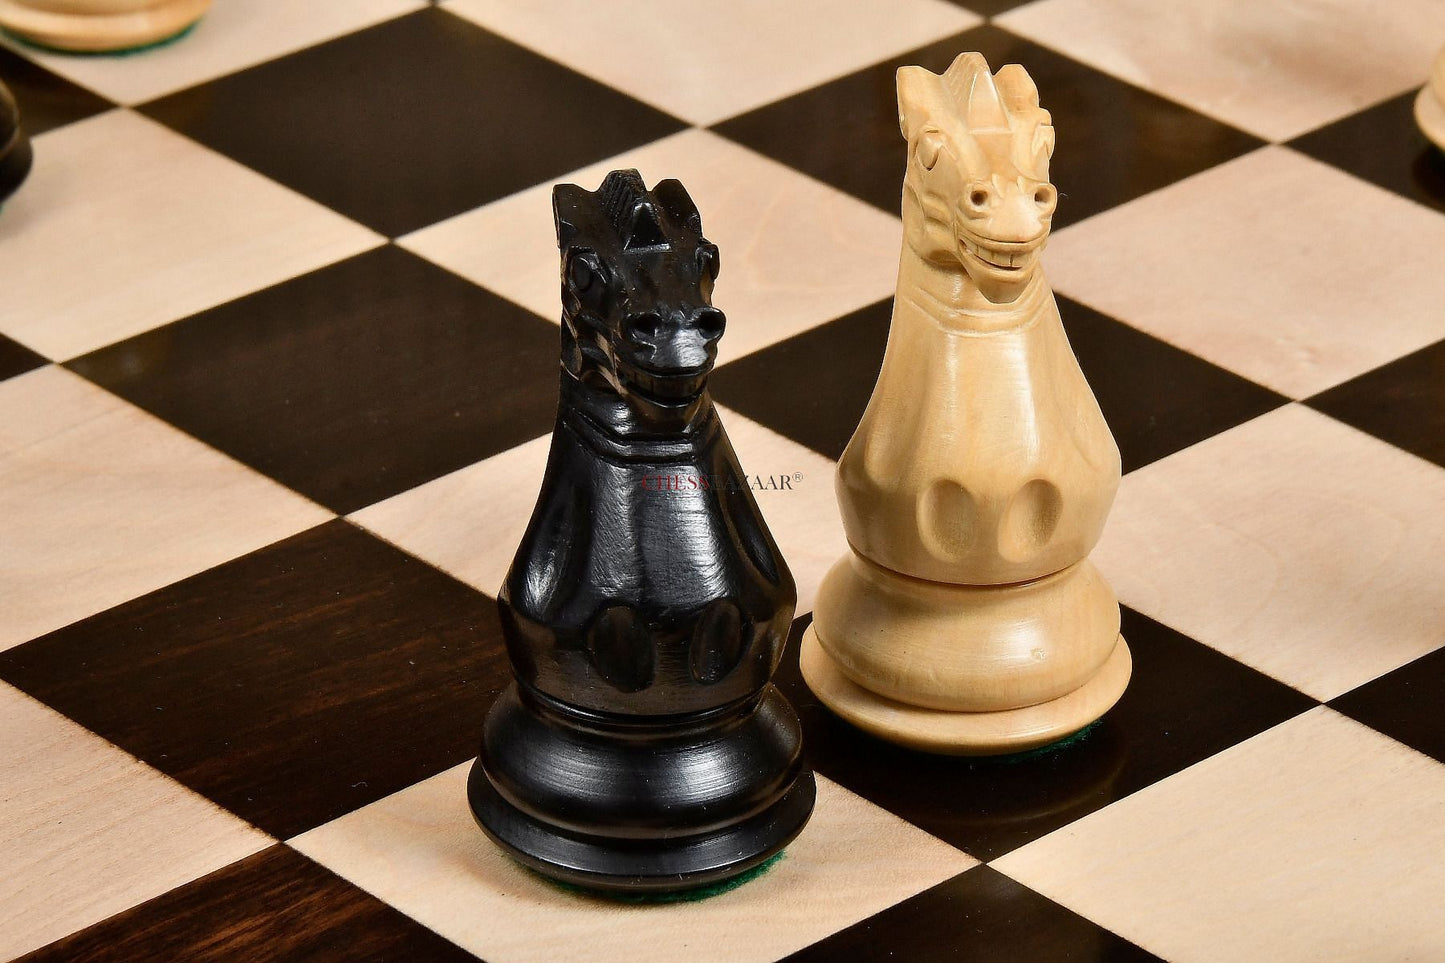 Desert Gold Staunton Series Wooden Chess Pieces in Ebonized Boxwood & Natural Boxwood - 4.0" King